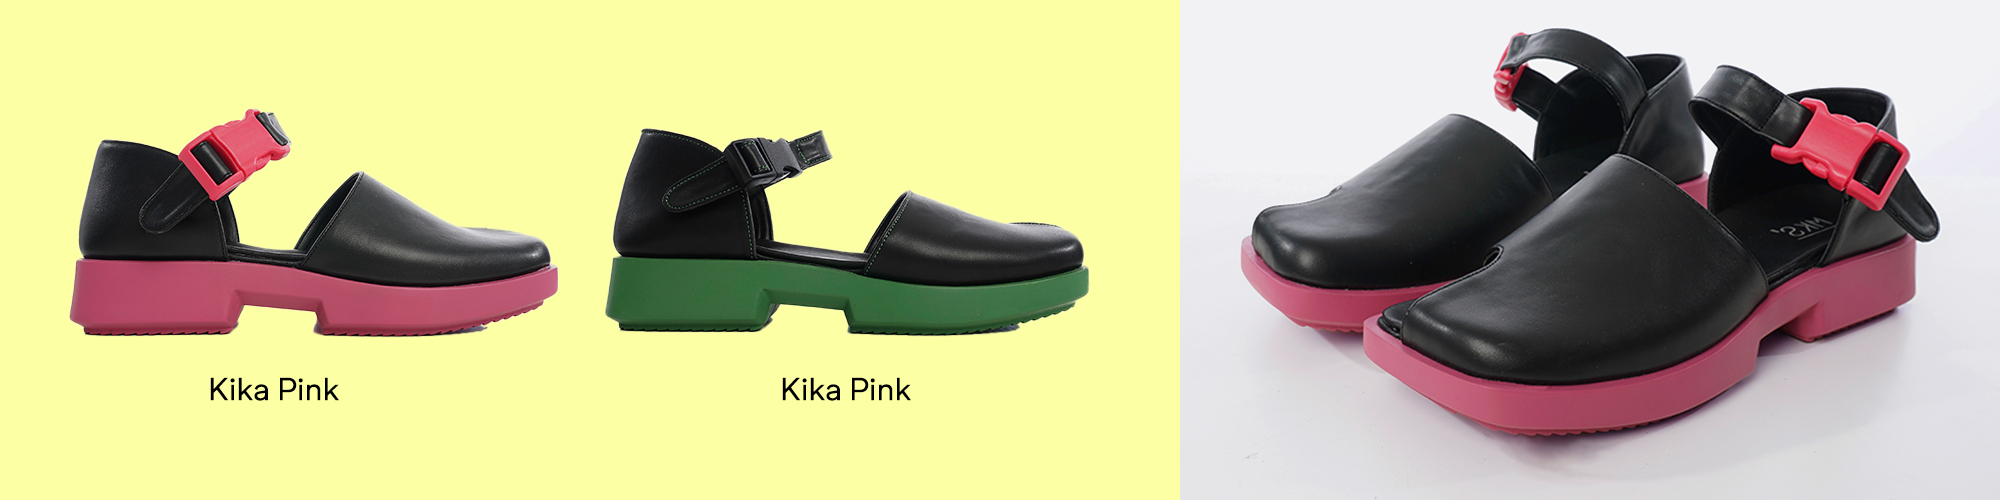 SHOP Kika Green & Kika Pink at www.mksshoes.com